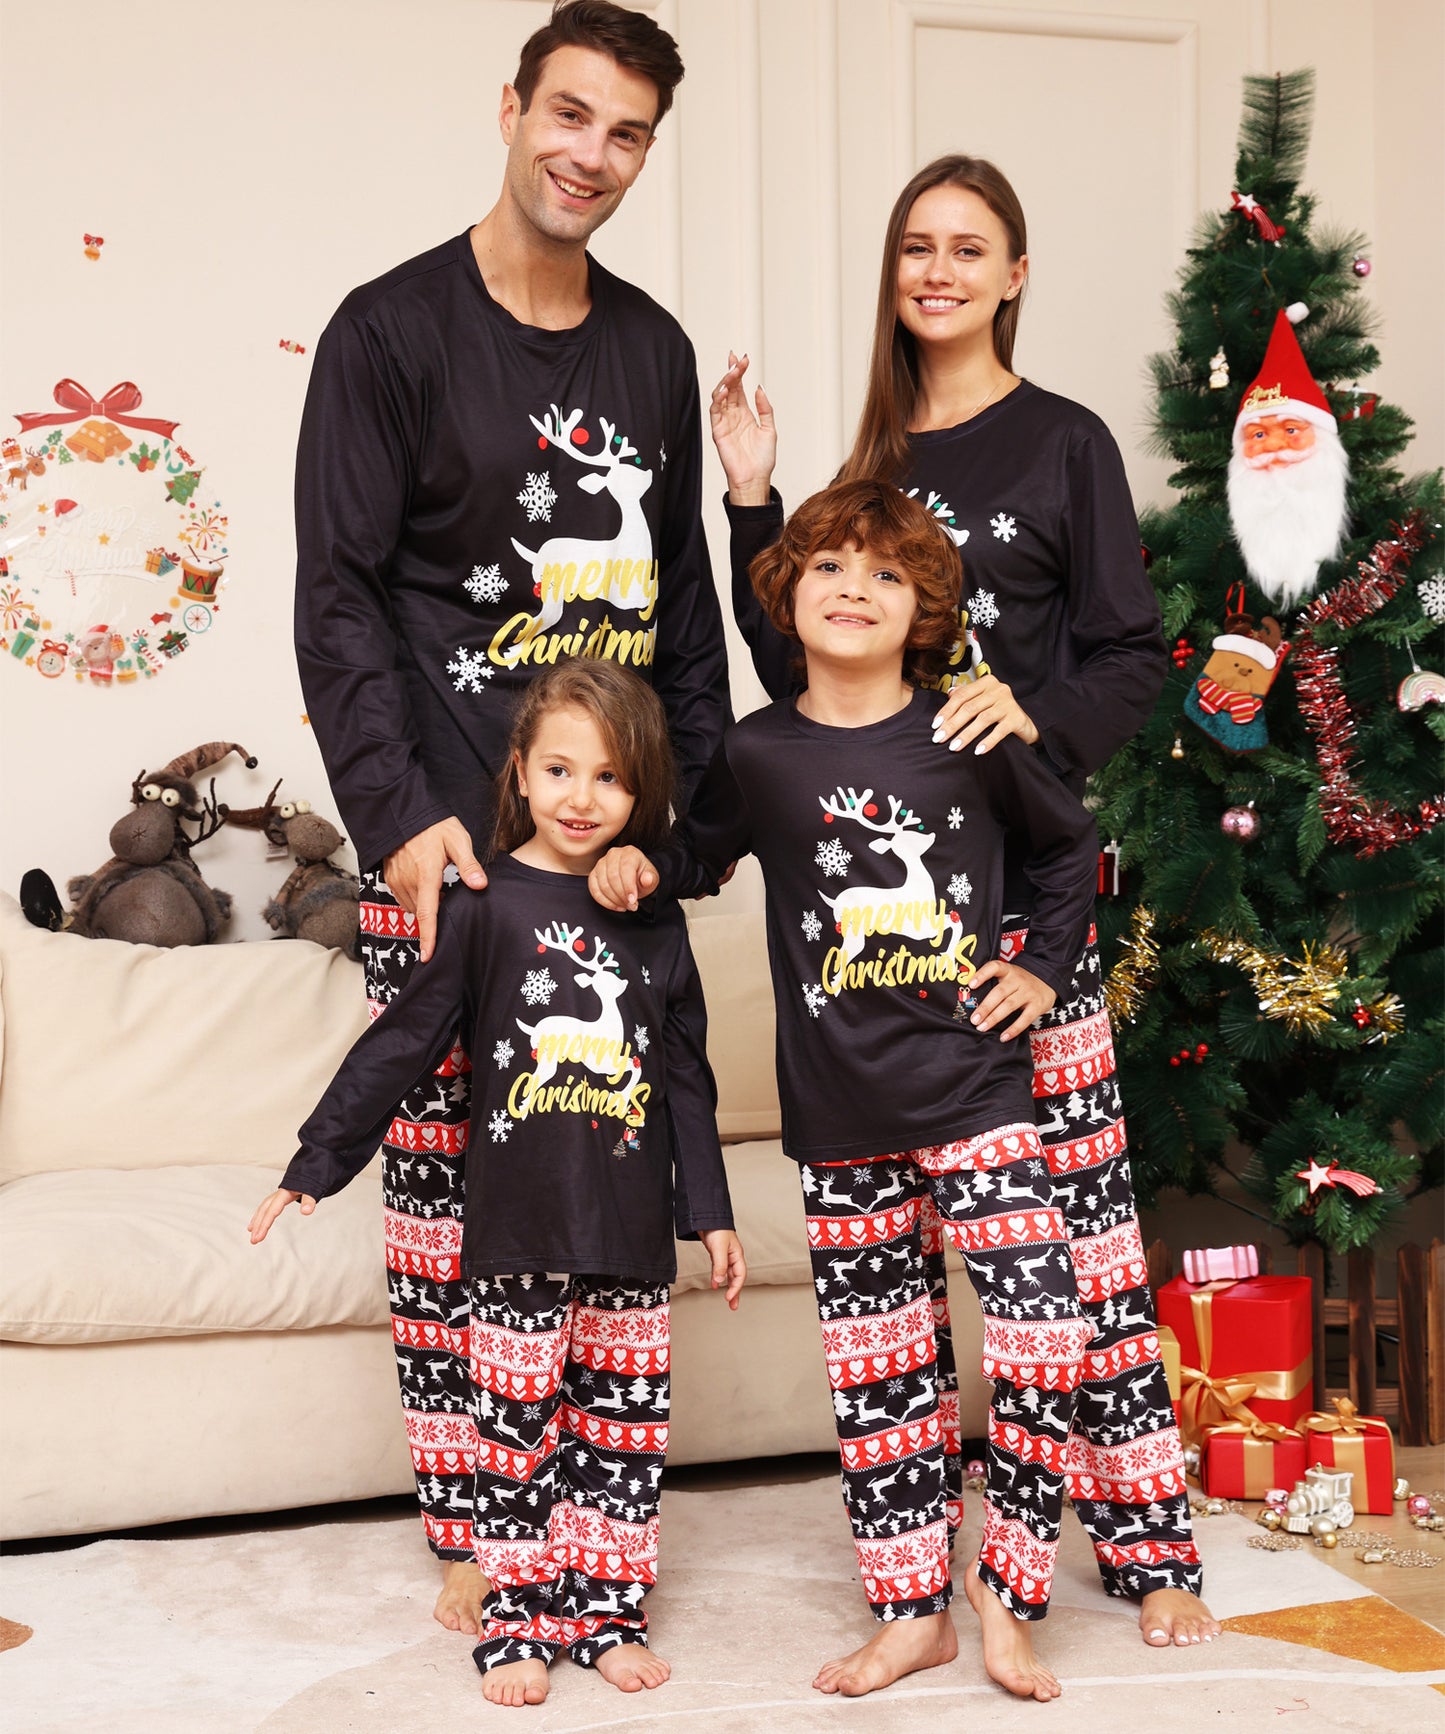 BamBam Letter Snowflake Deer Christmas Parent-Child Outfit Printed Home Clothes Pajamas - BamBam